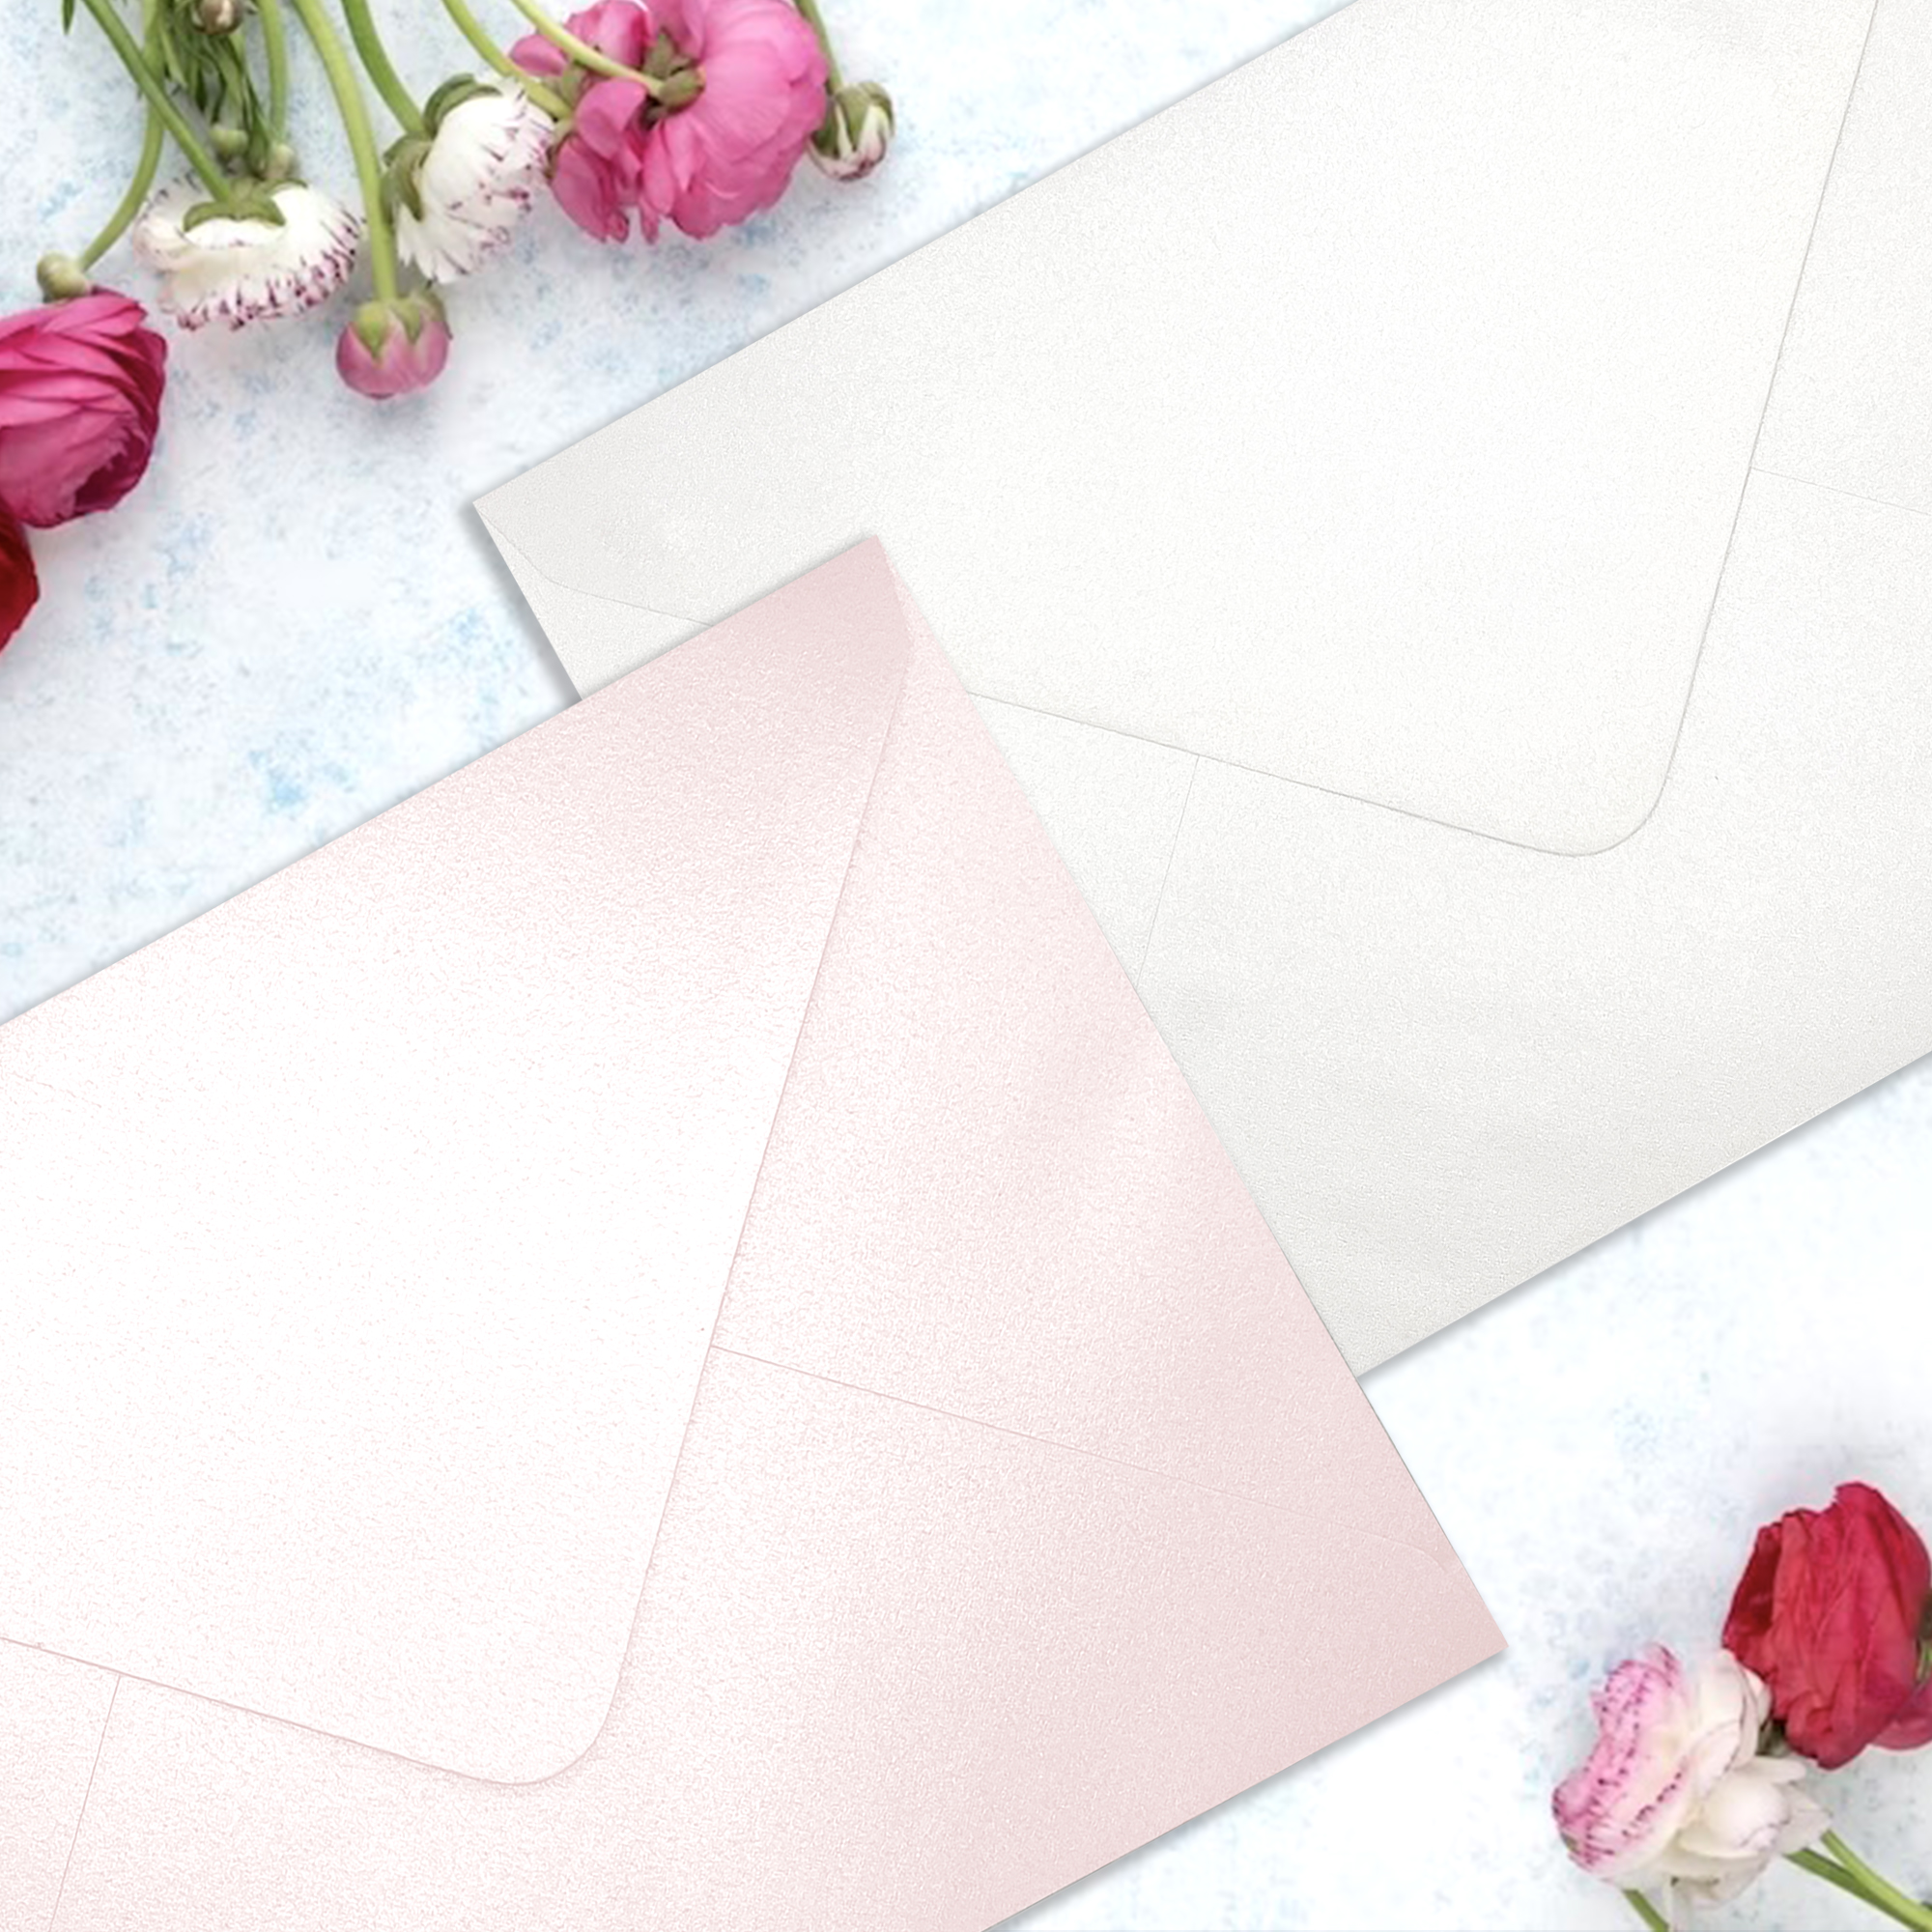 Pearlescent Wedding Envelopes - The Envelope People